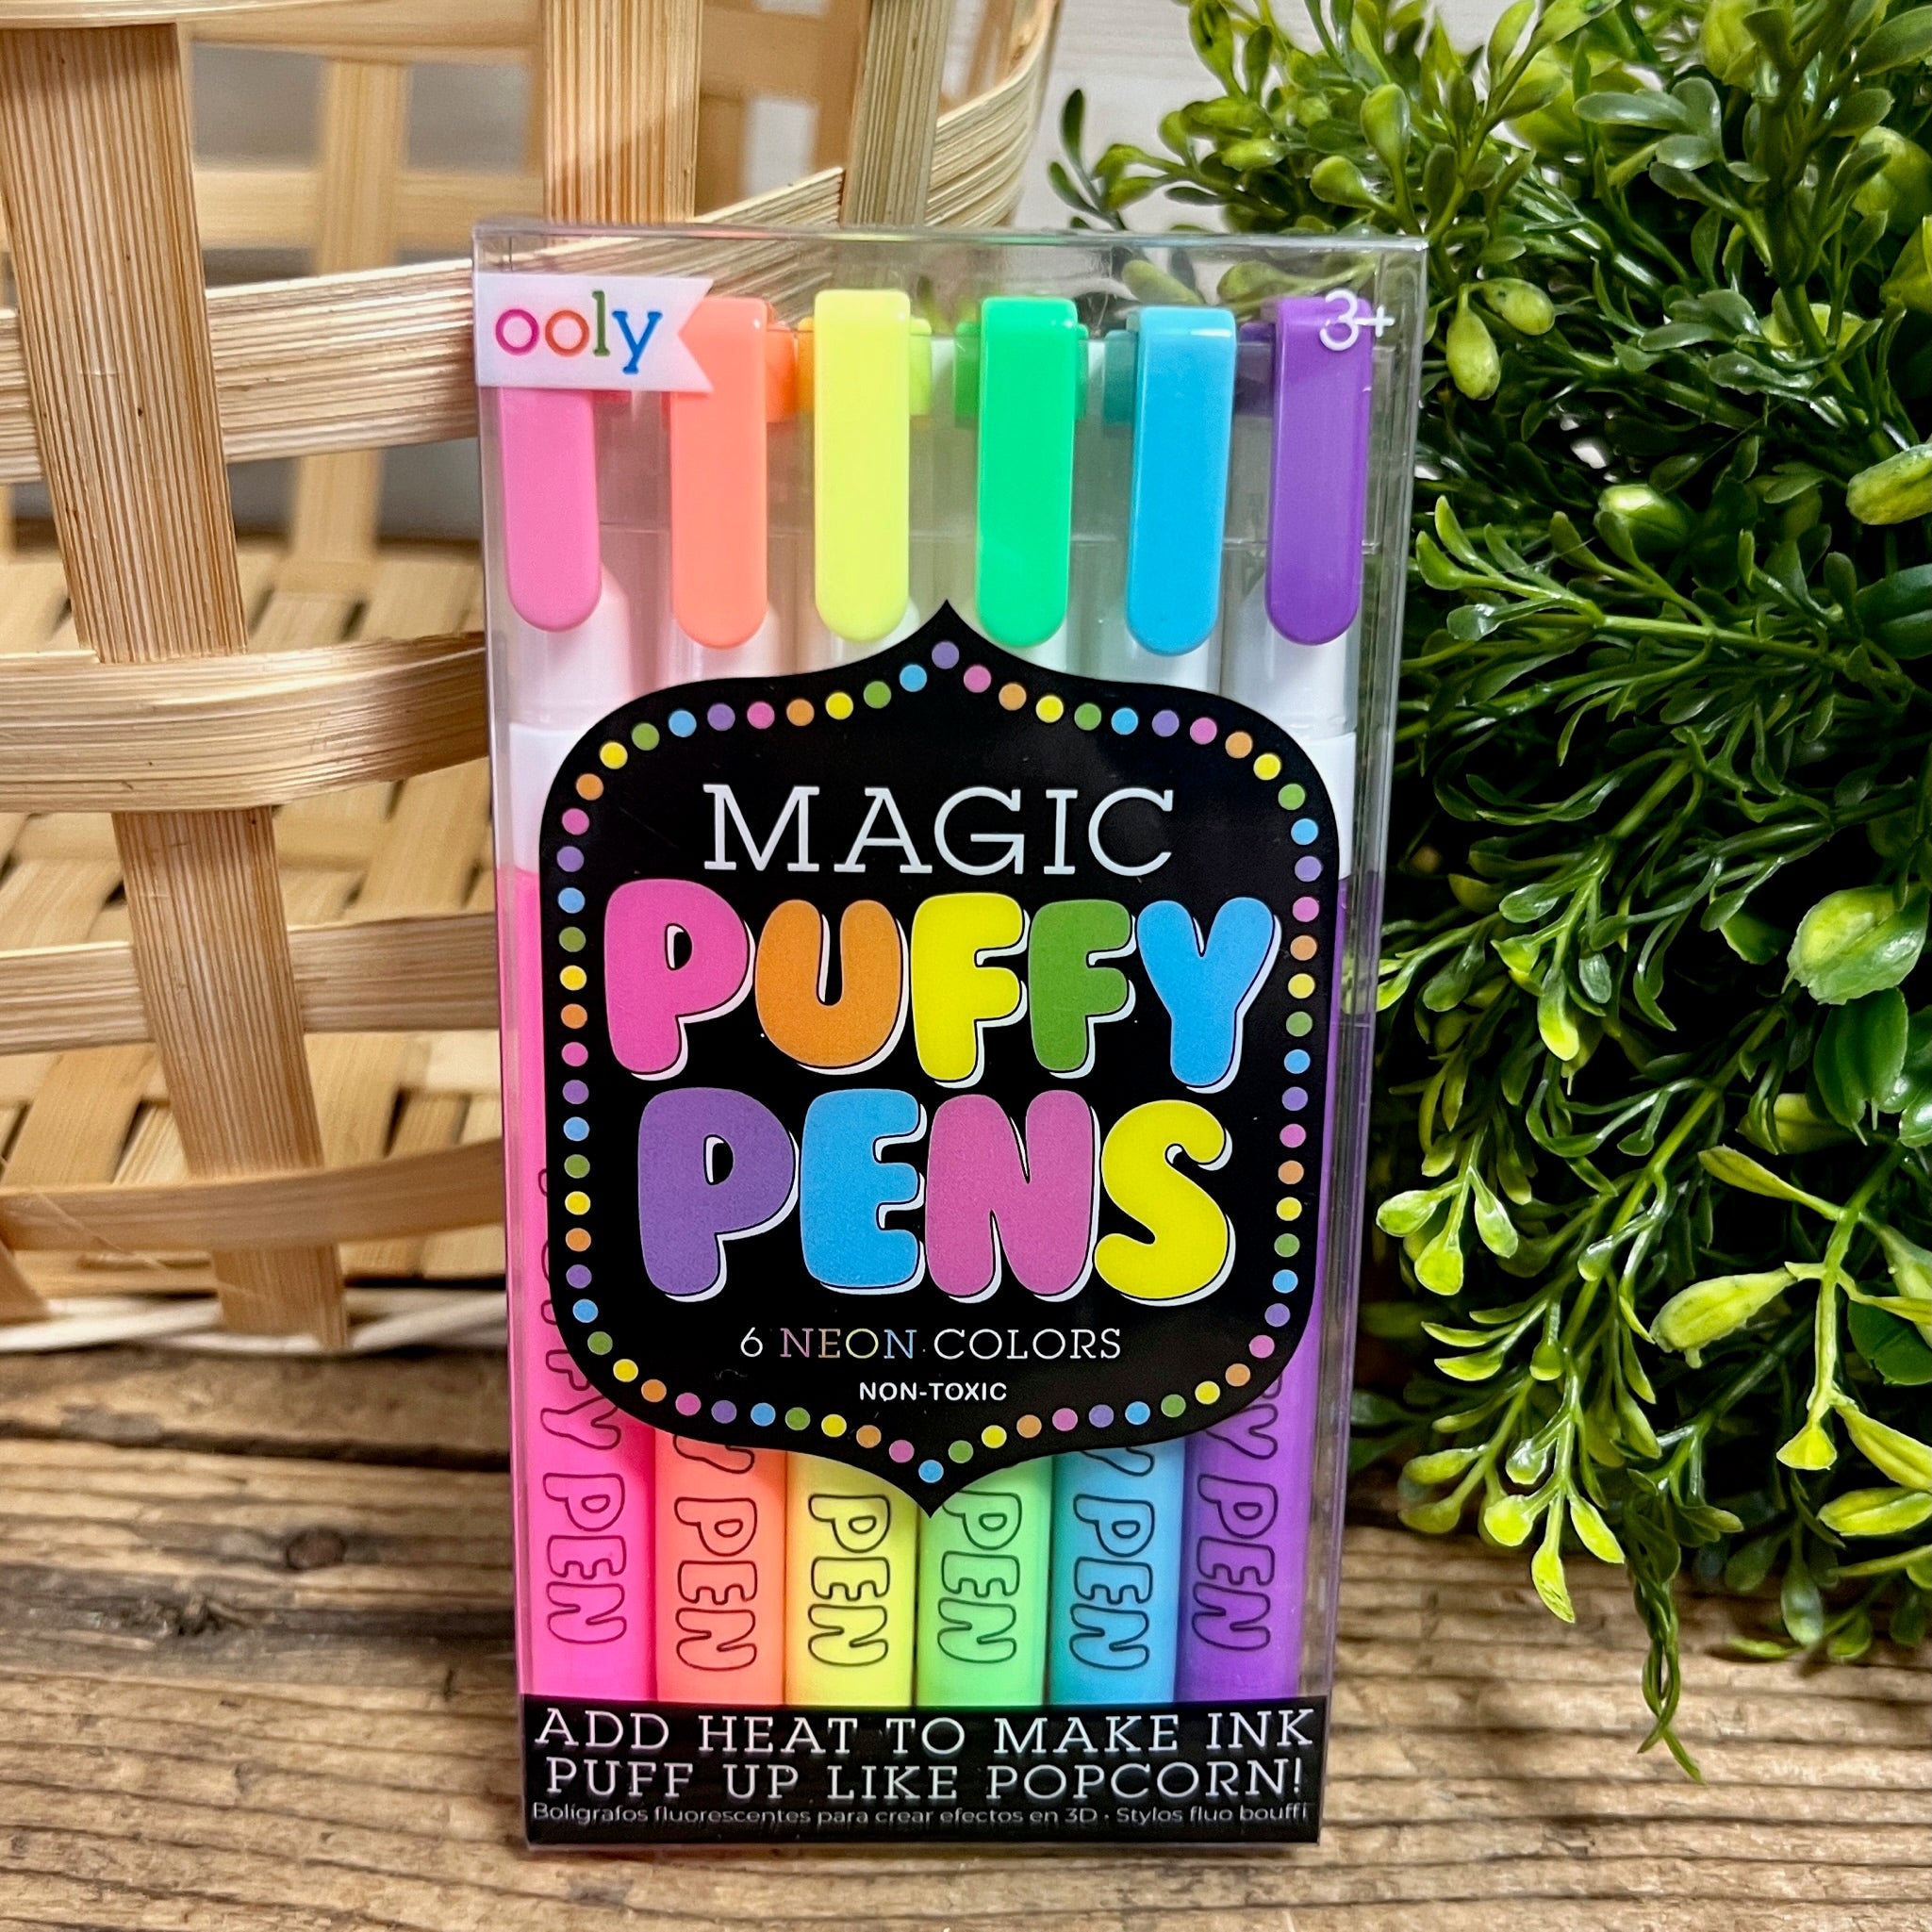 Puffy Paint Pens .63oz 5/Pkg-Primary